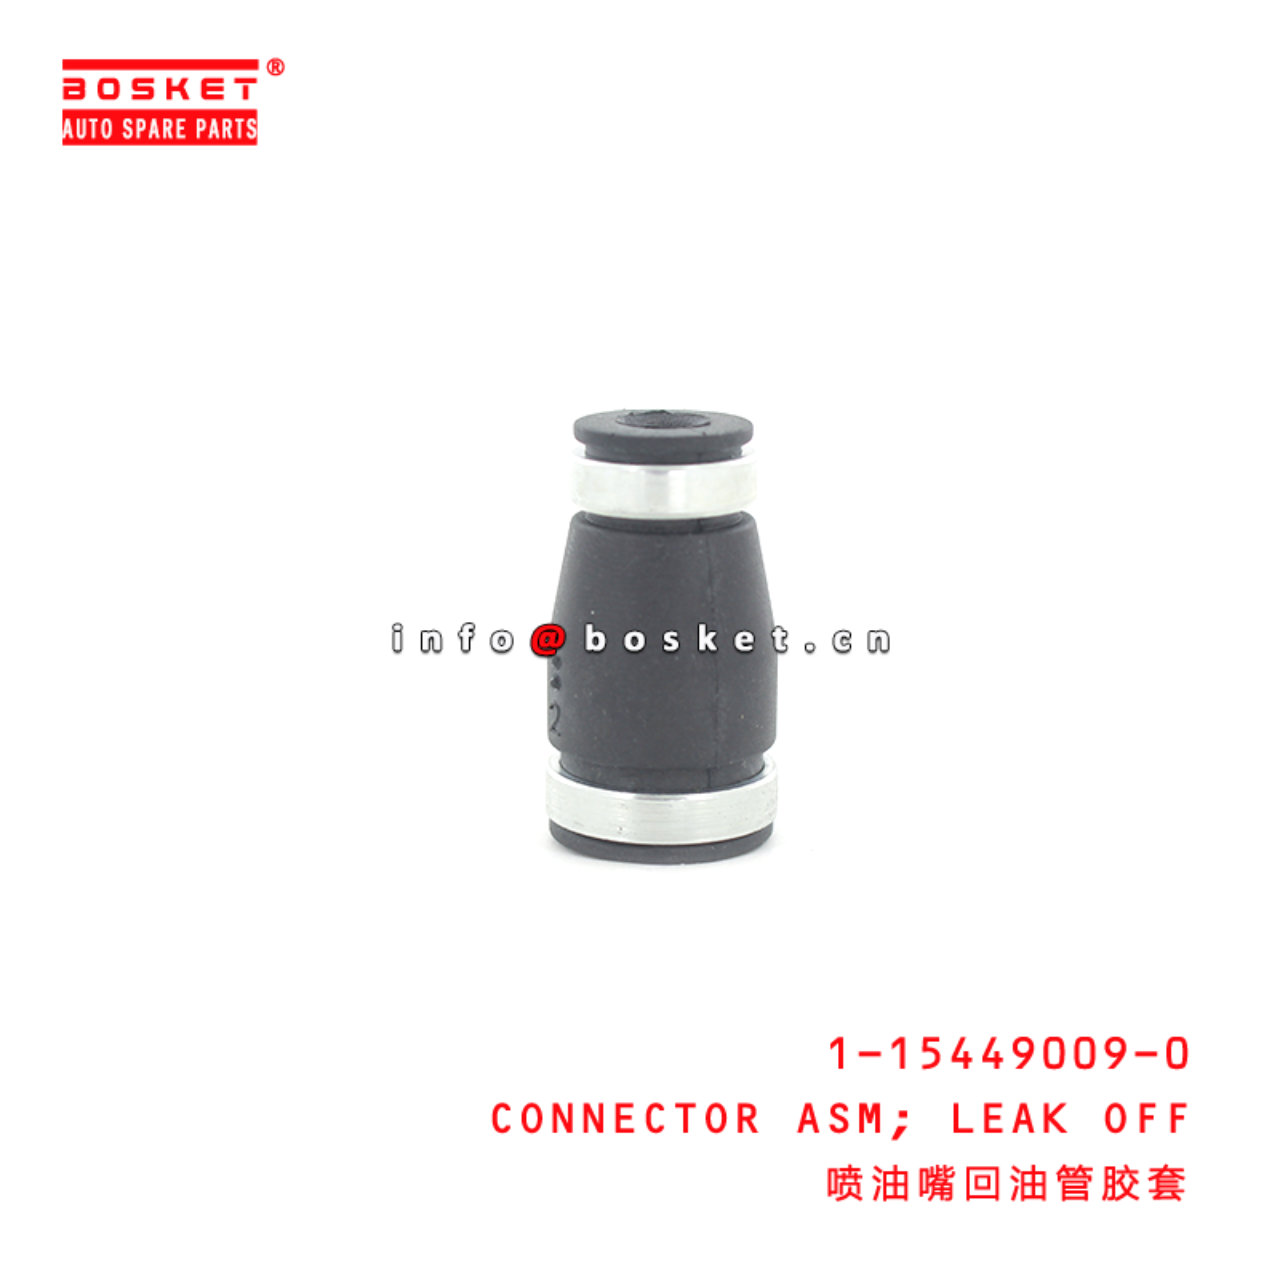 1-15449009-0 Leak Off Connector Assembly Suitable for ISUZU SKSR 1154490090